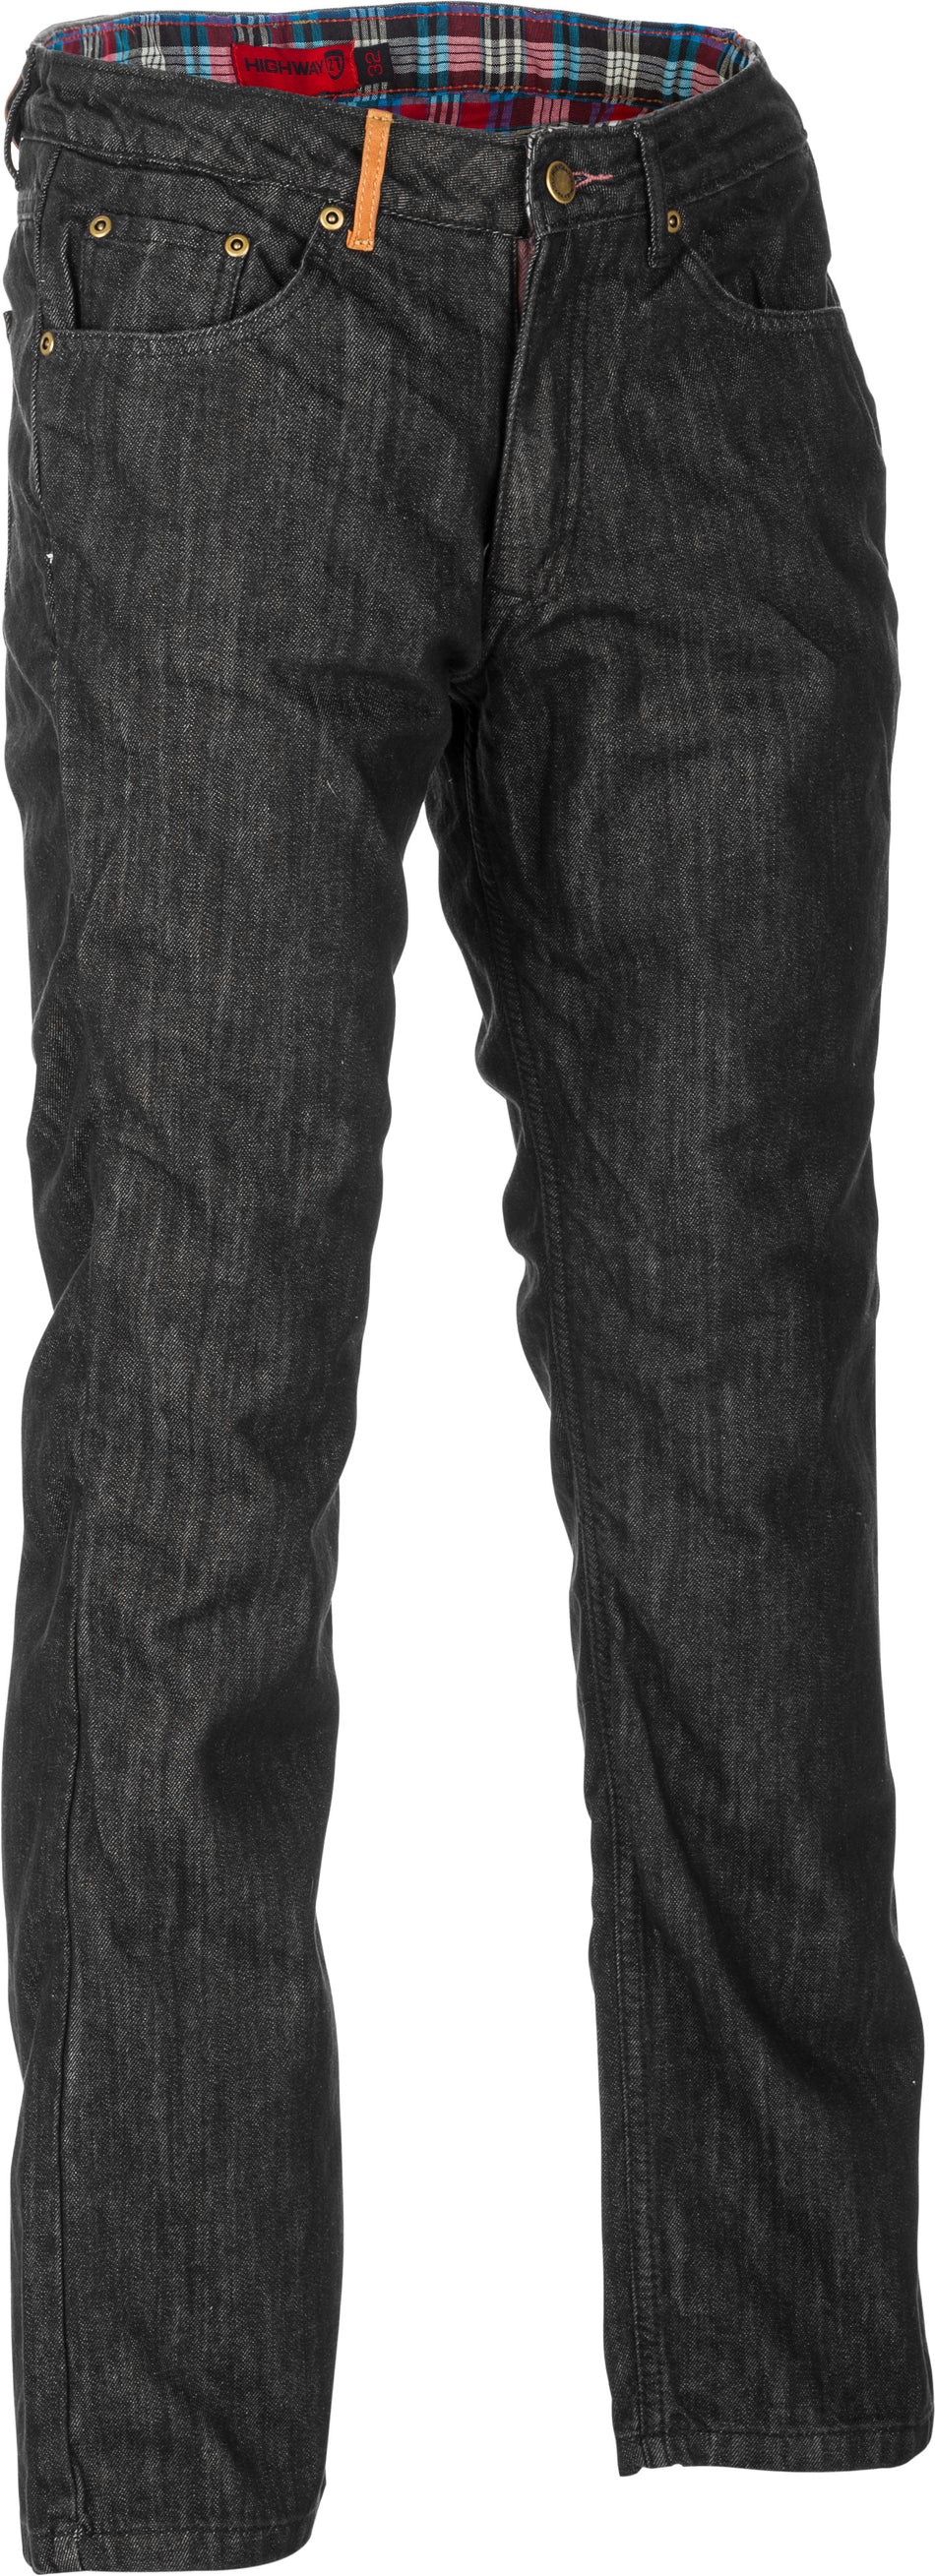 HIGHWAY 21 Jeans Black Sz 40 Tall #6049 489-131~42